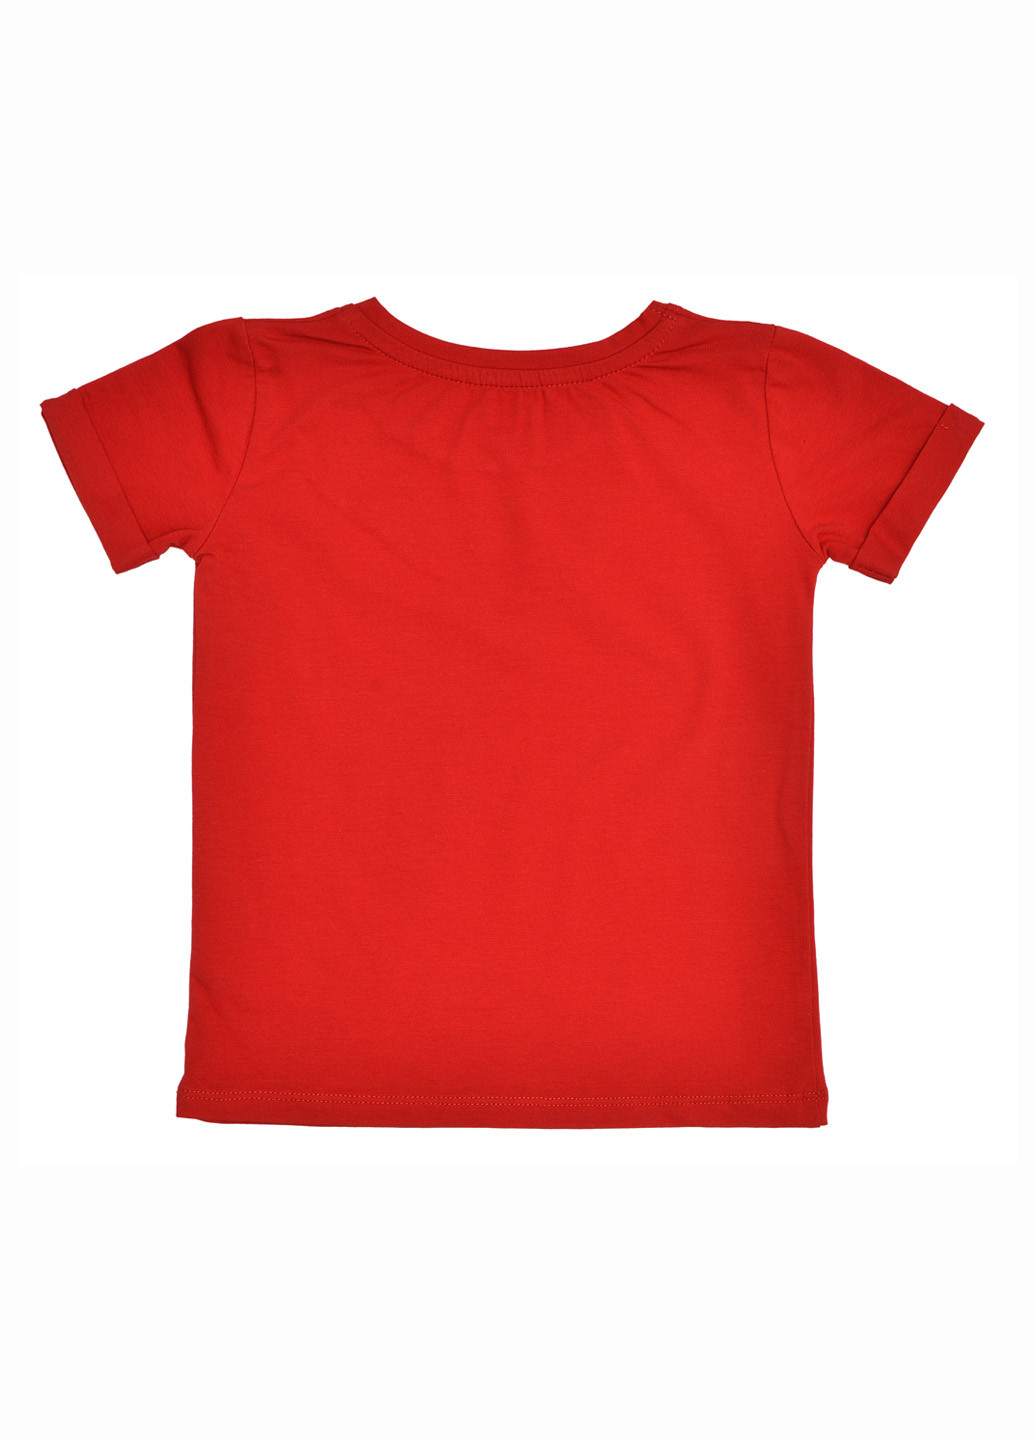 Красная демисезонная футболка Фламинго Текстиль